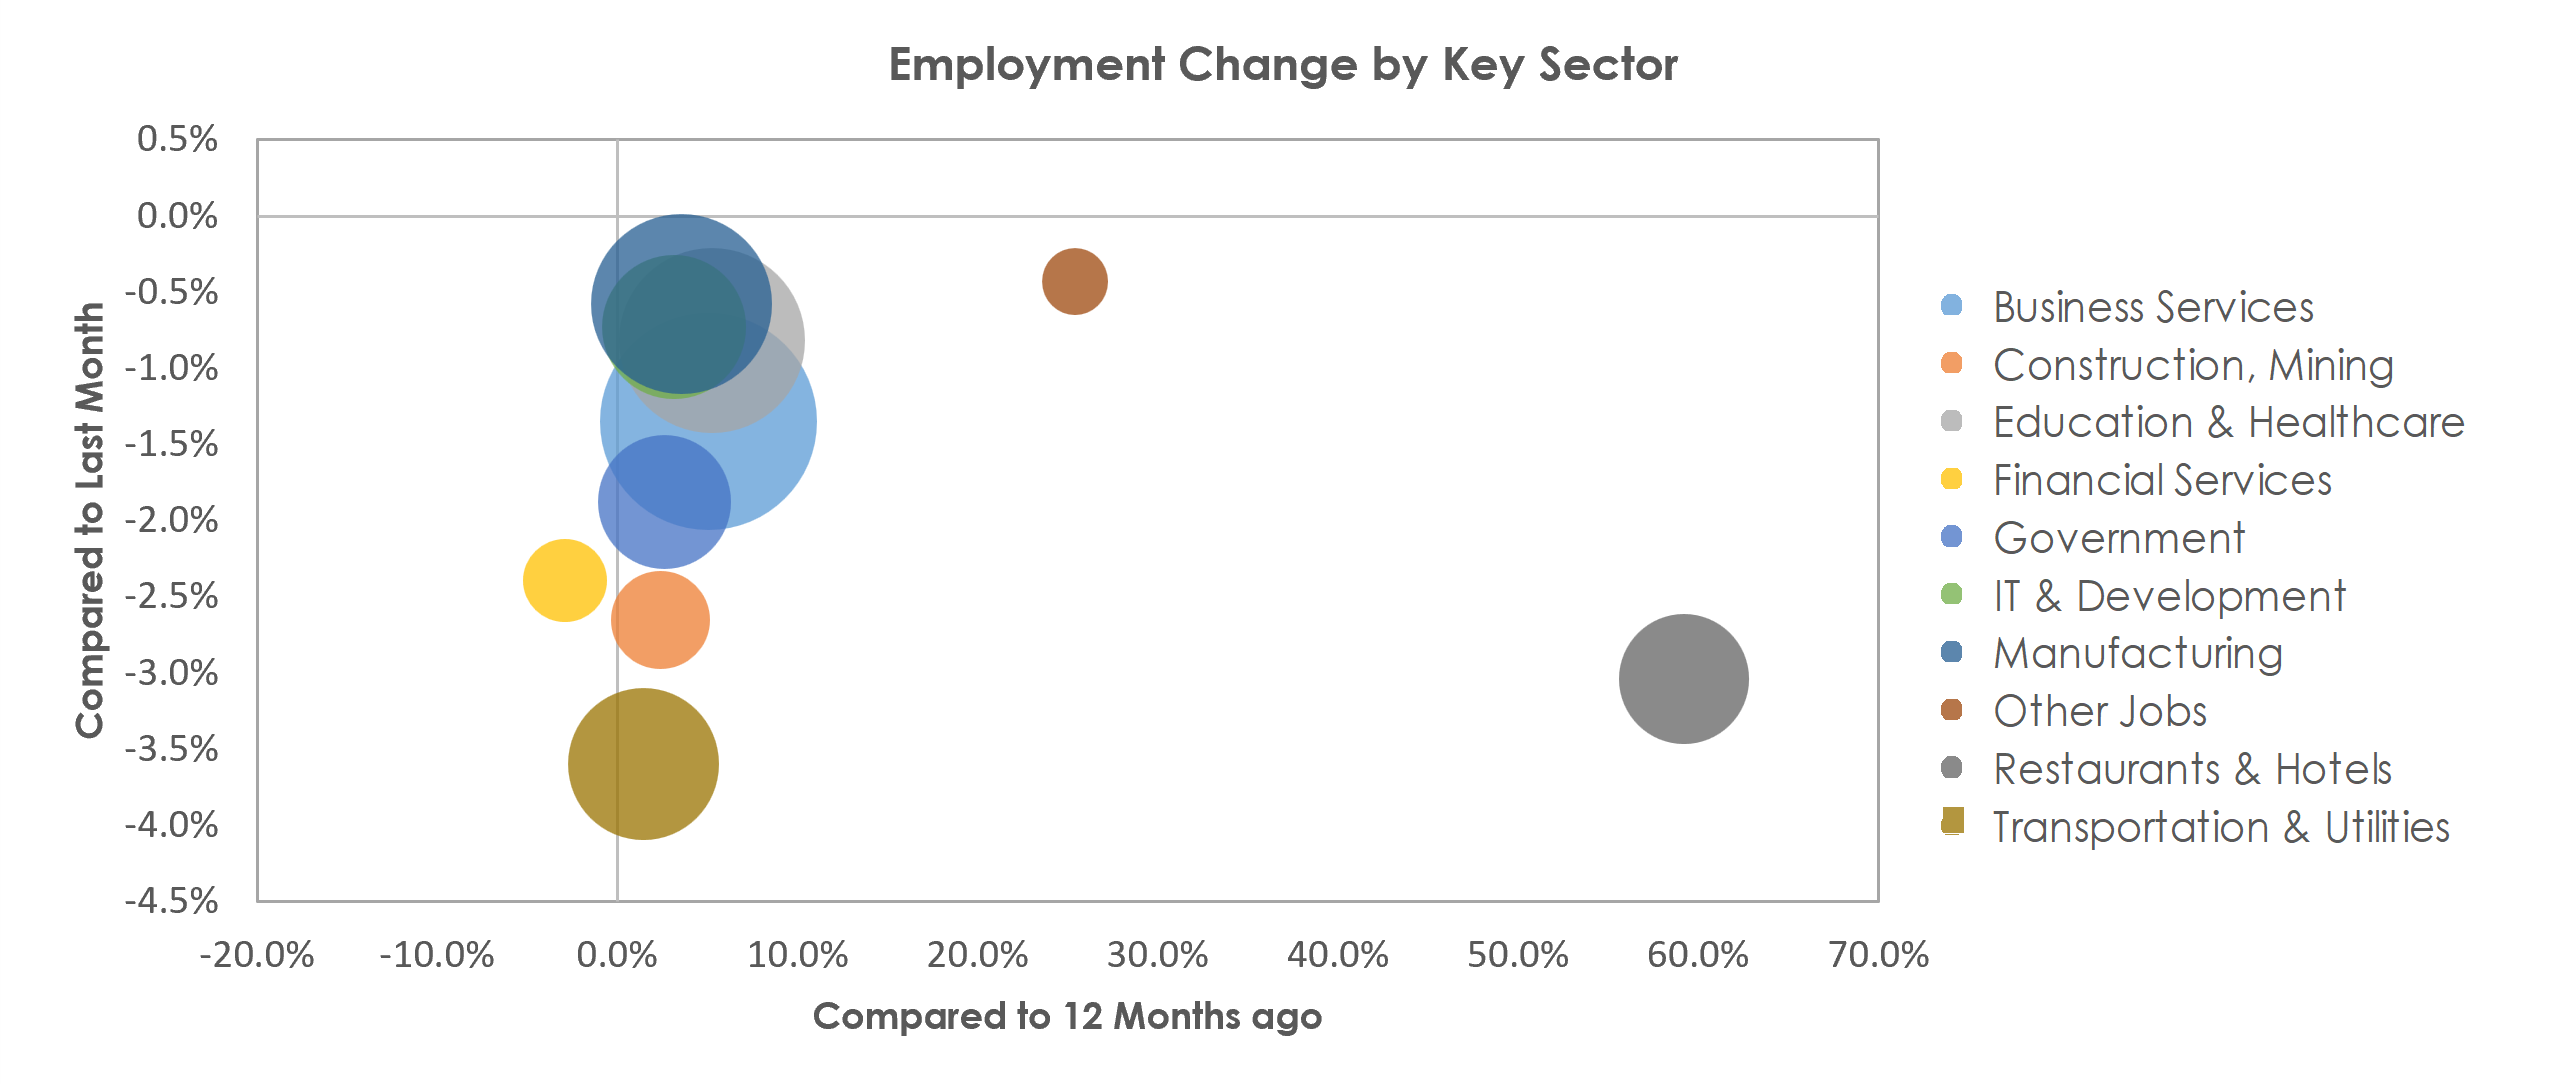 San Jose-Sunnyvale-Santa Clara, CA Unemployment by Industry January 2022